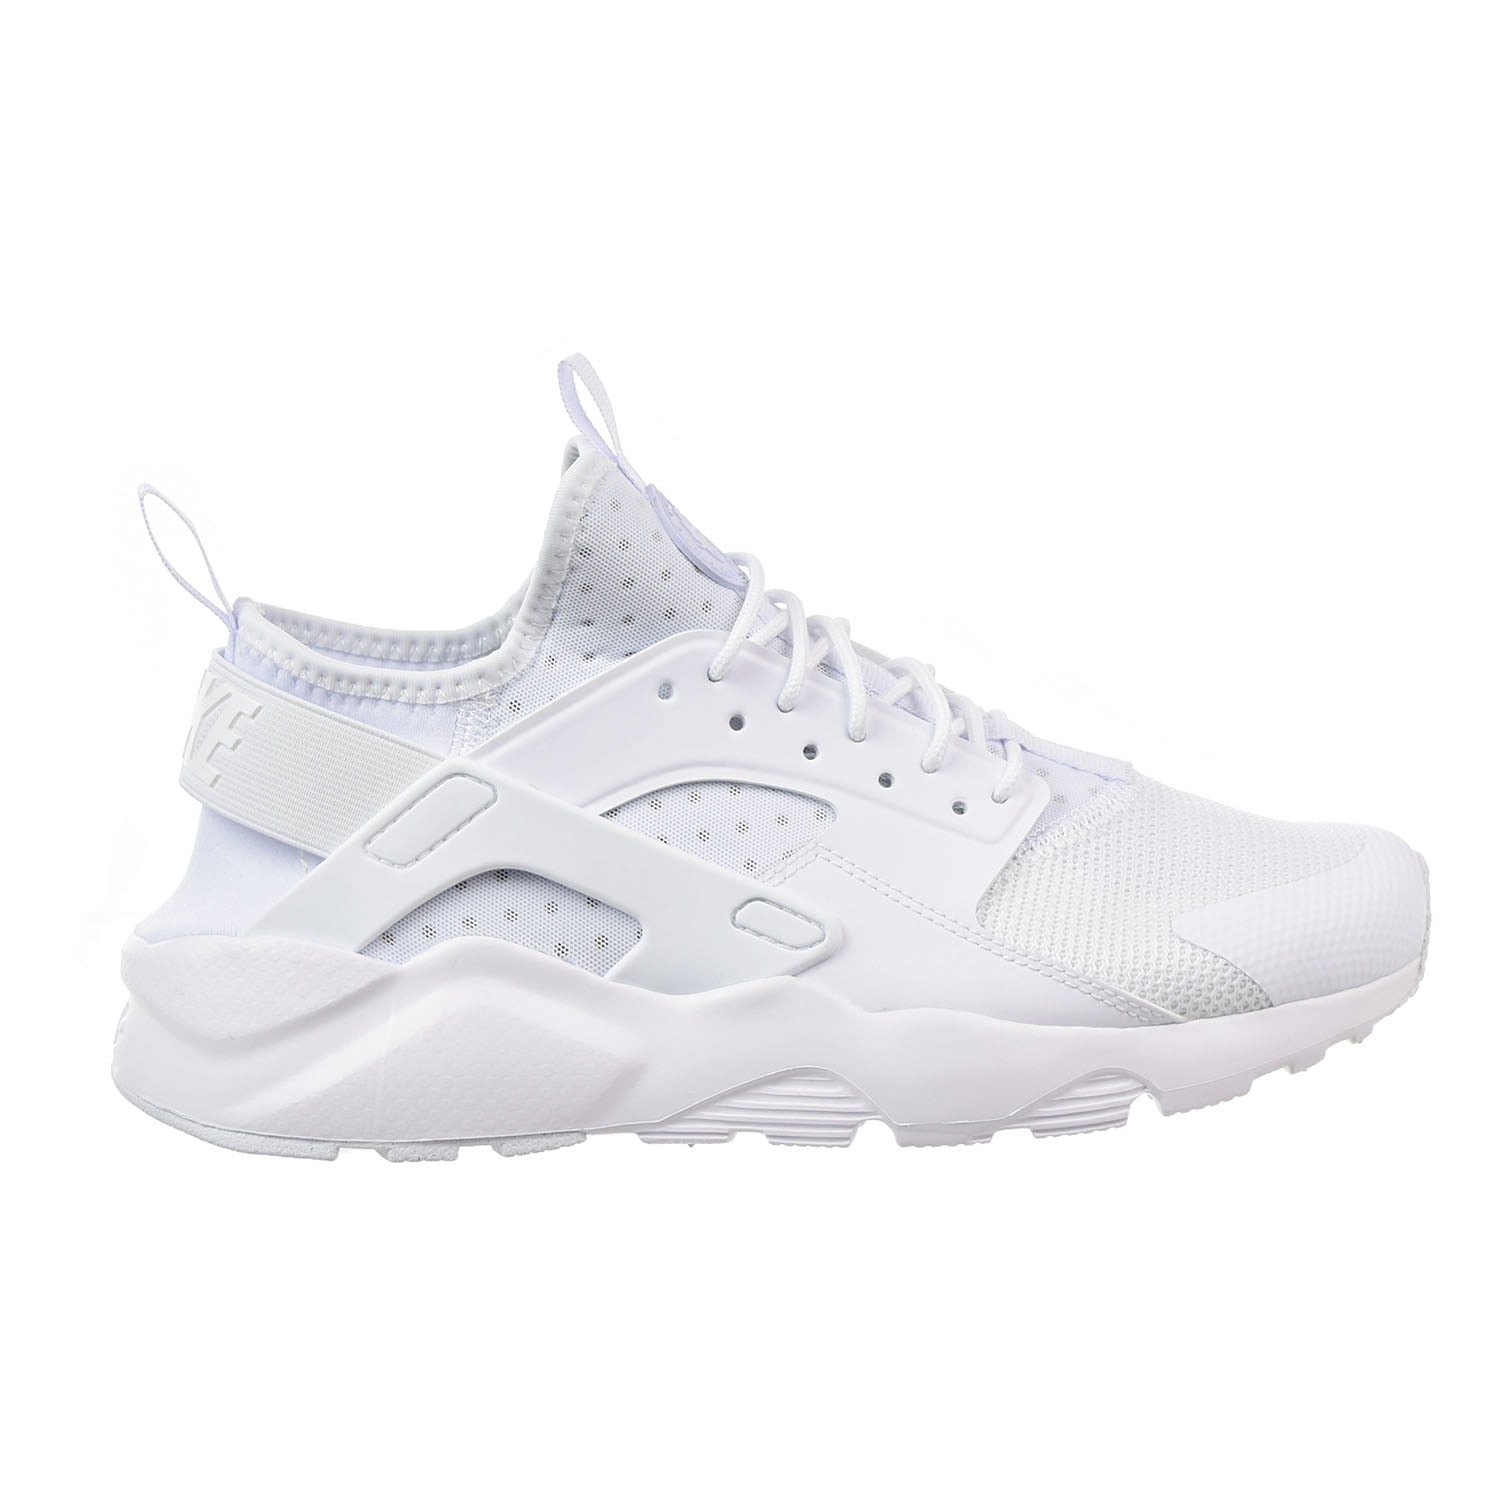 Nike Air Huarache Run Ultra Men's Shoes White/White/White - Walmart.com